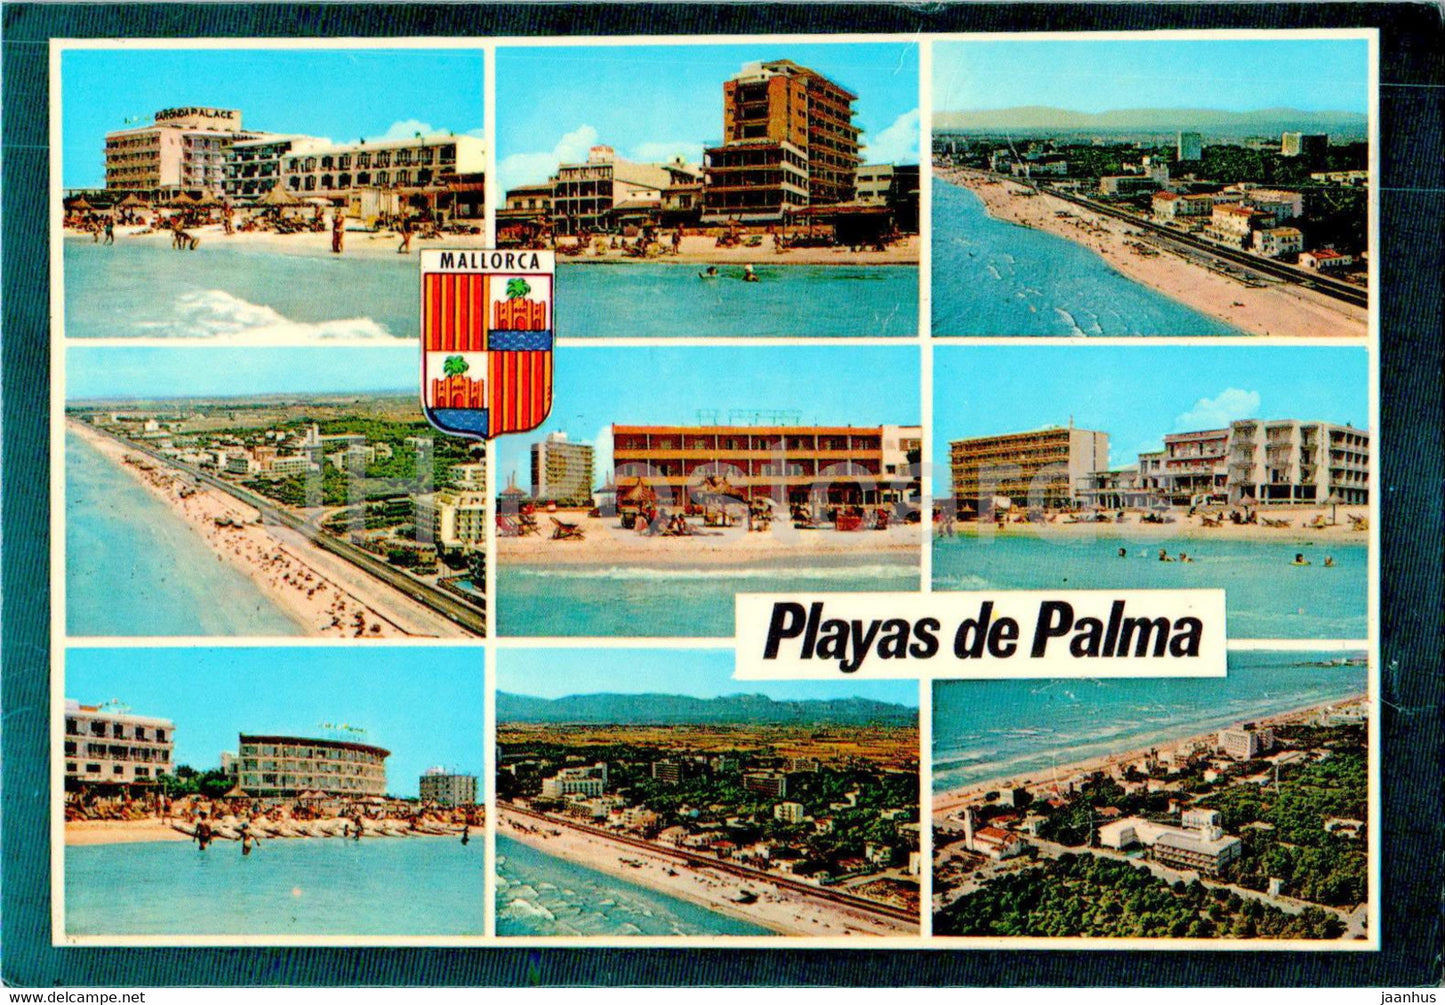 Playas de Palma - El Arenal - Mallorca - multiview - 1613 - 1988 - Spain - used - JH Postcards